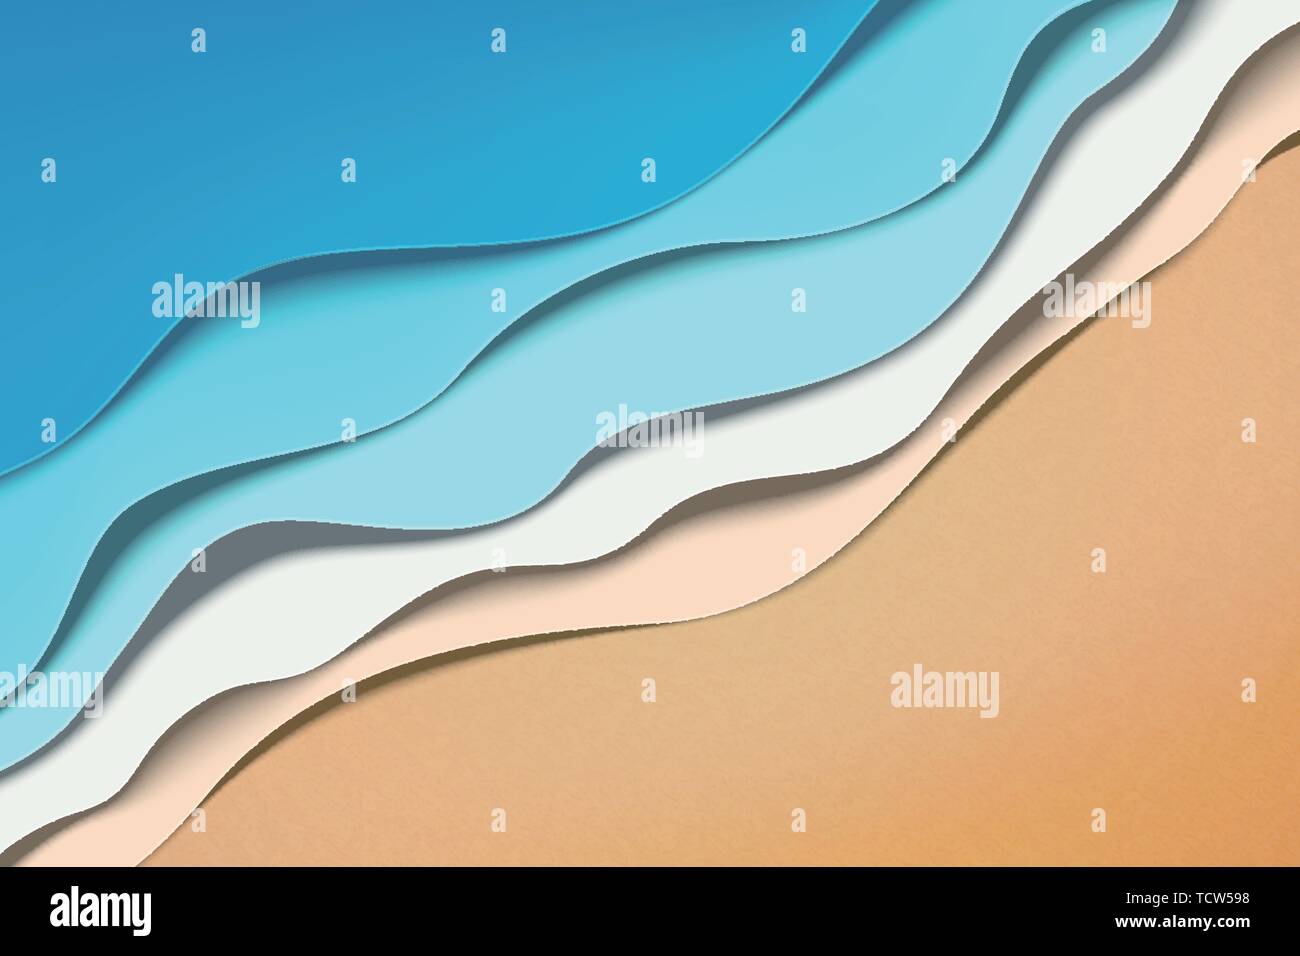 Paper art summer beach wave tides in 3d illustration Stock Vector